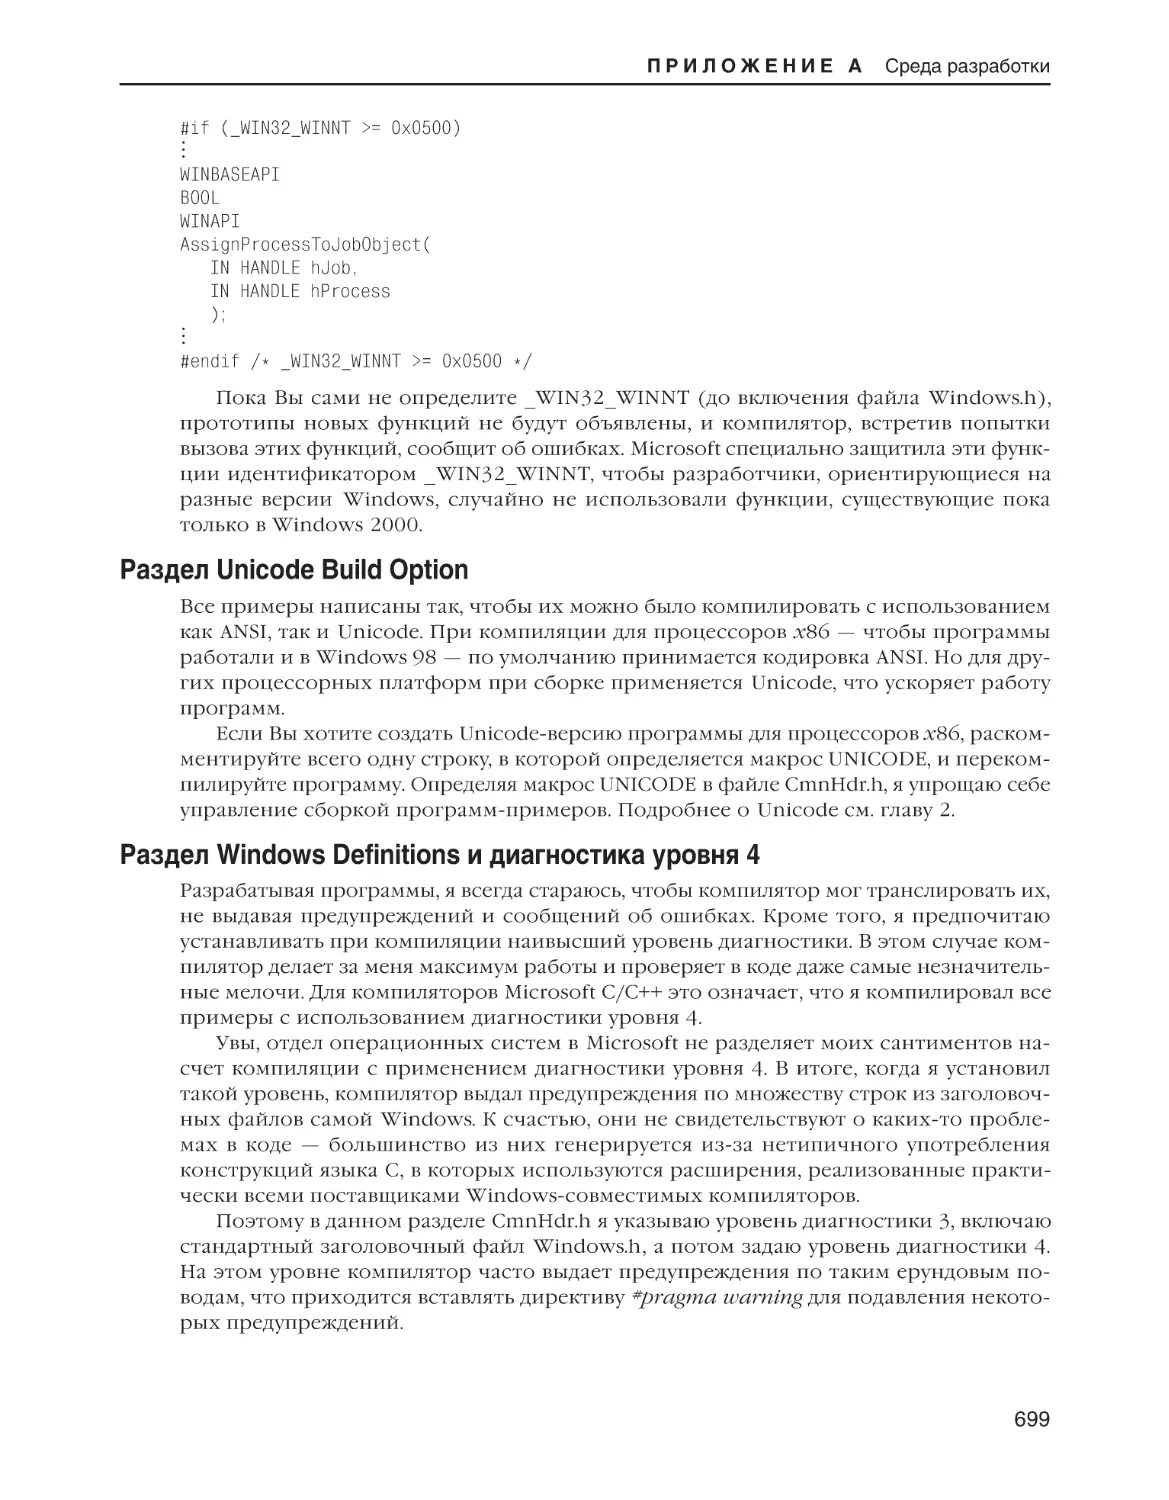 Раздел Unicode Build Option
Раздел Windows Definitions и диагностика уровня 4